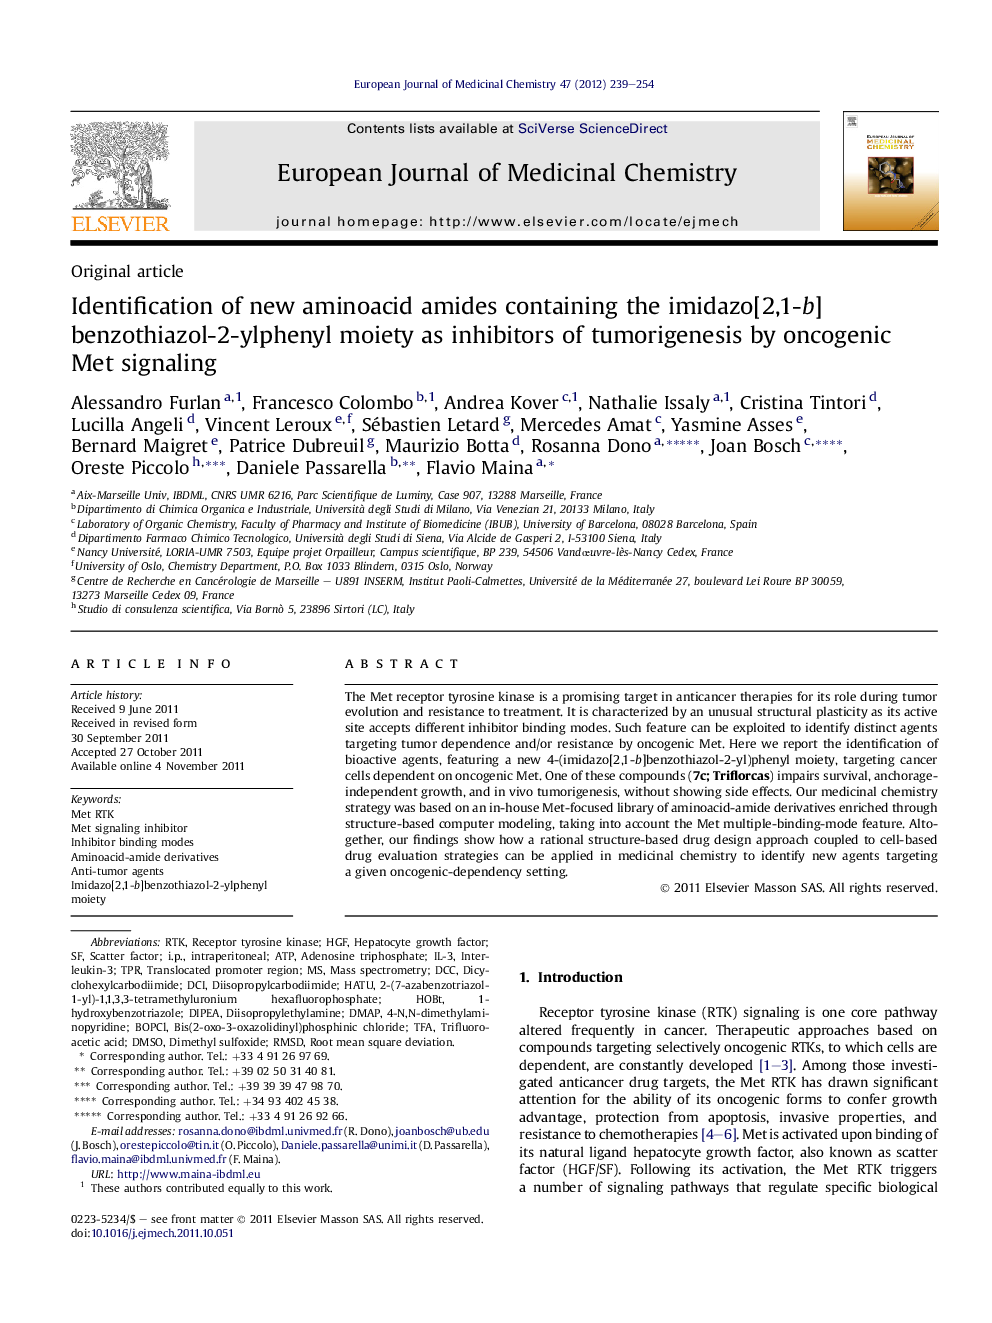 Identification of new aminoacid amides containing the imidazo[2,1-b]benzothiazol-2-ylphenyl moiety as inhibitors of tumorigenesis by oncogenic Met signaling